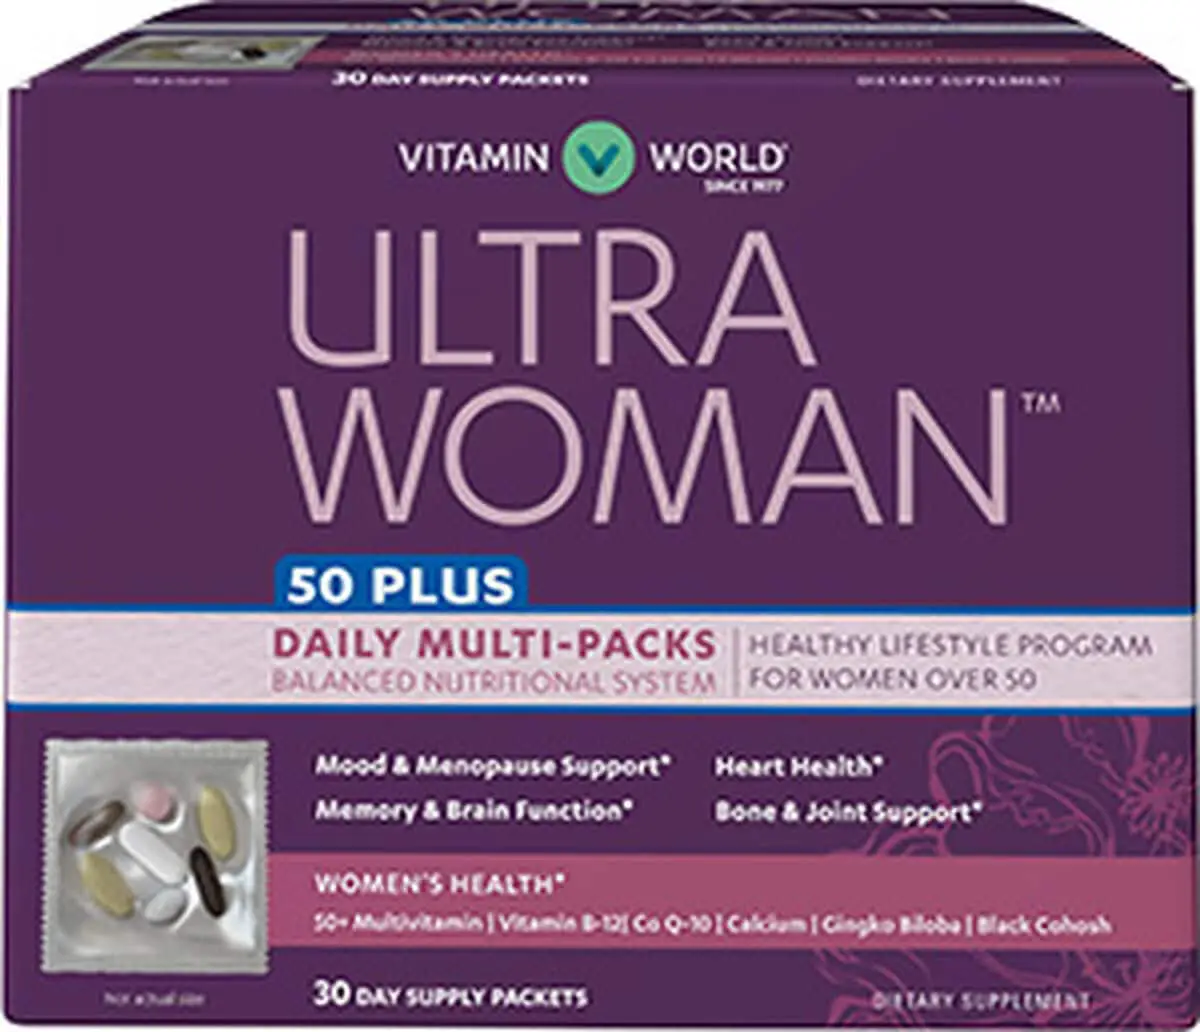 Ultra Woman 50 Plus Daily Multi